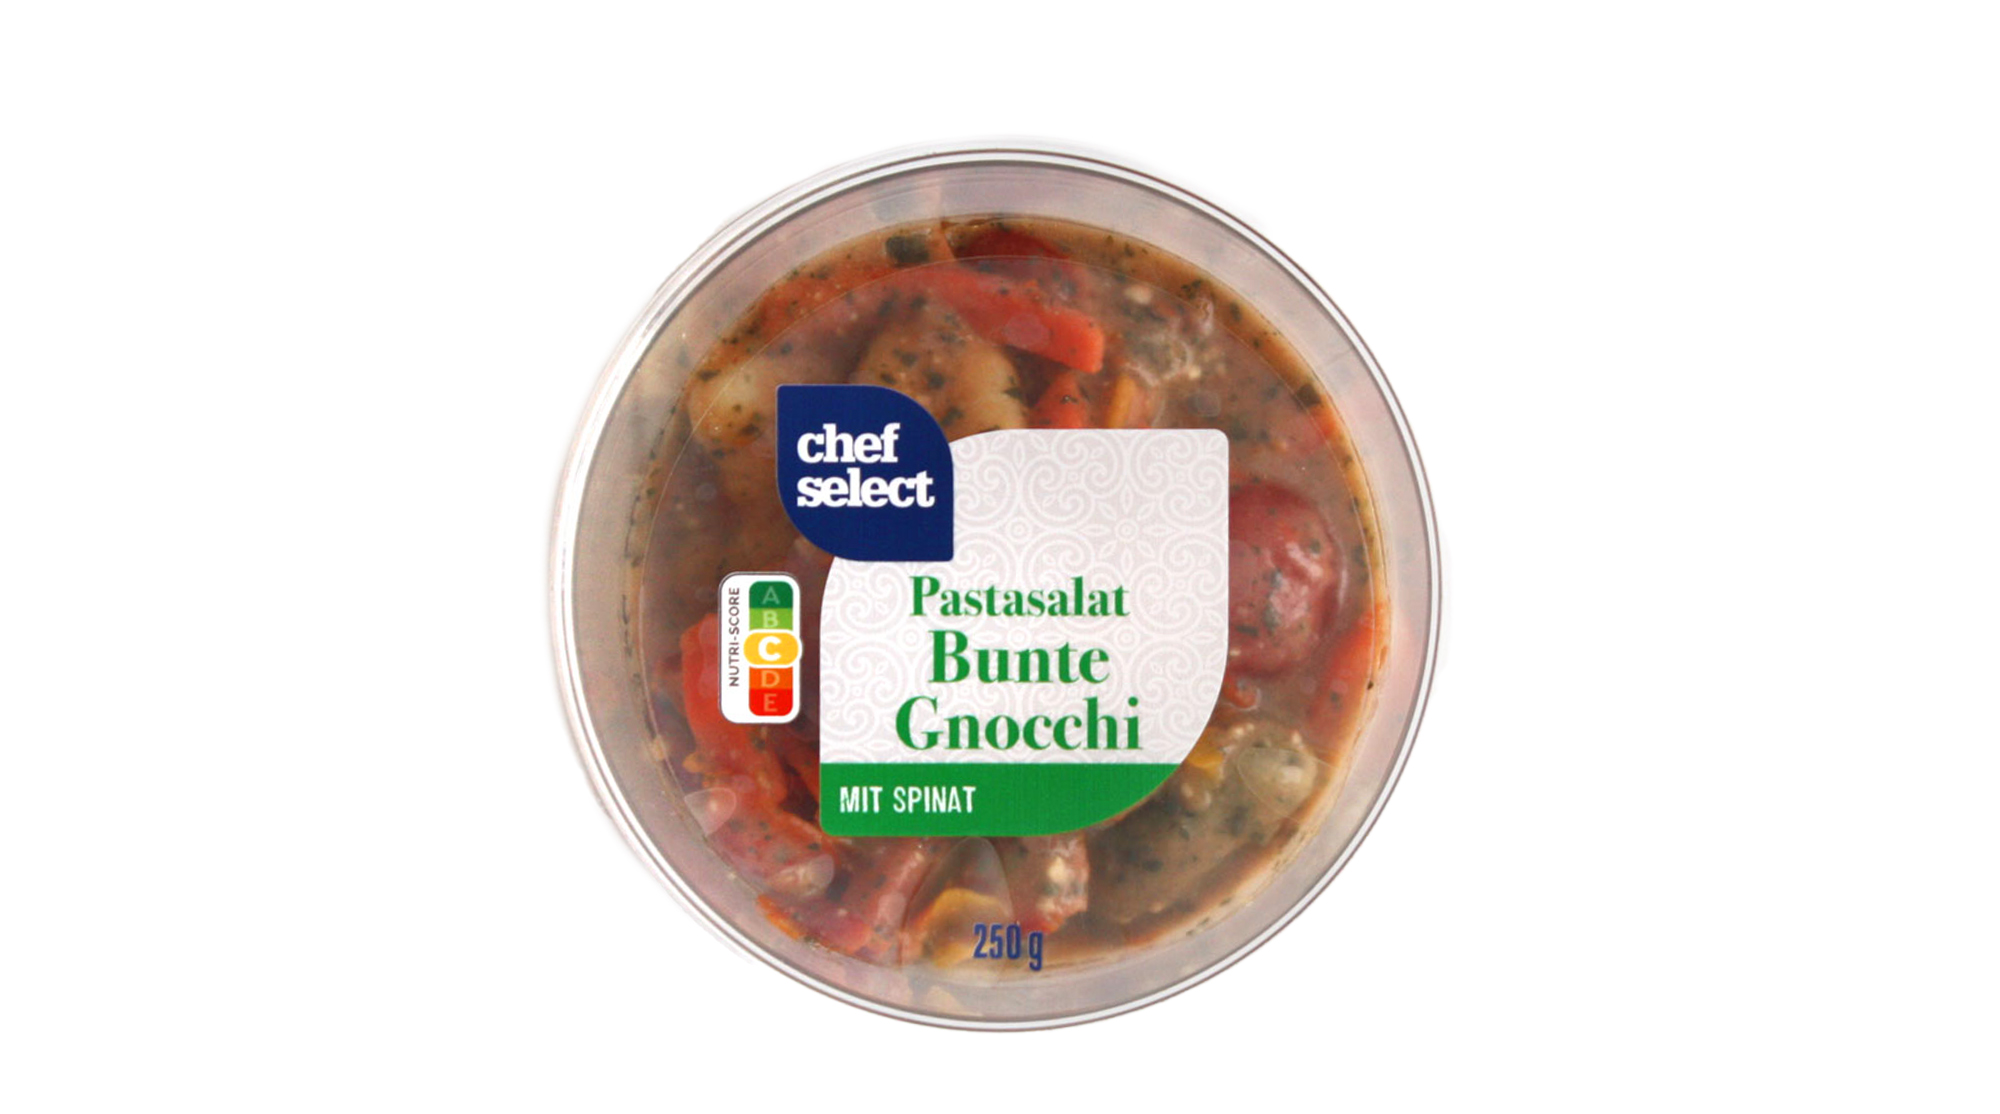 Chef Select Pasta Salat Lebensmittelklarheit | Bunte Gnocchi Spinat mit